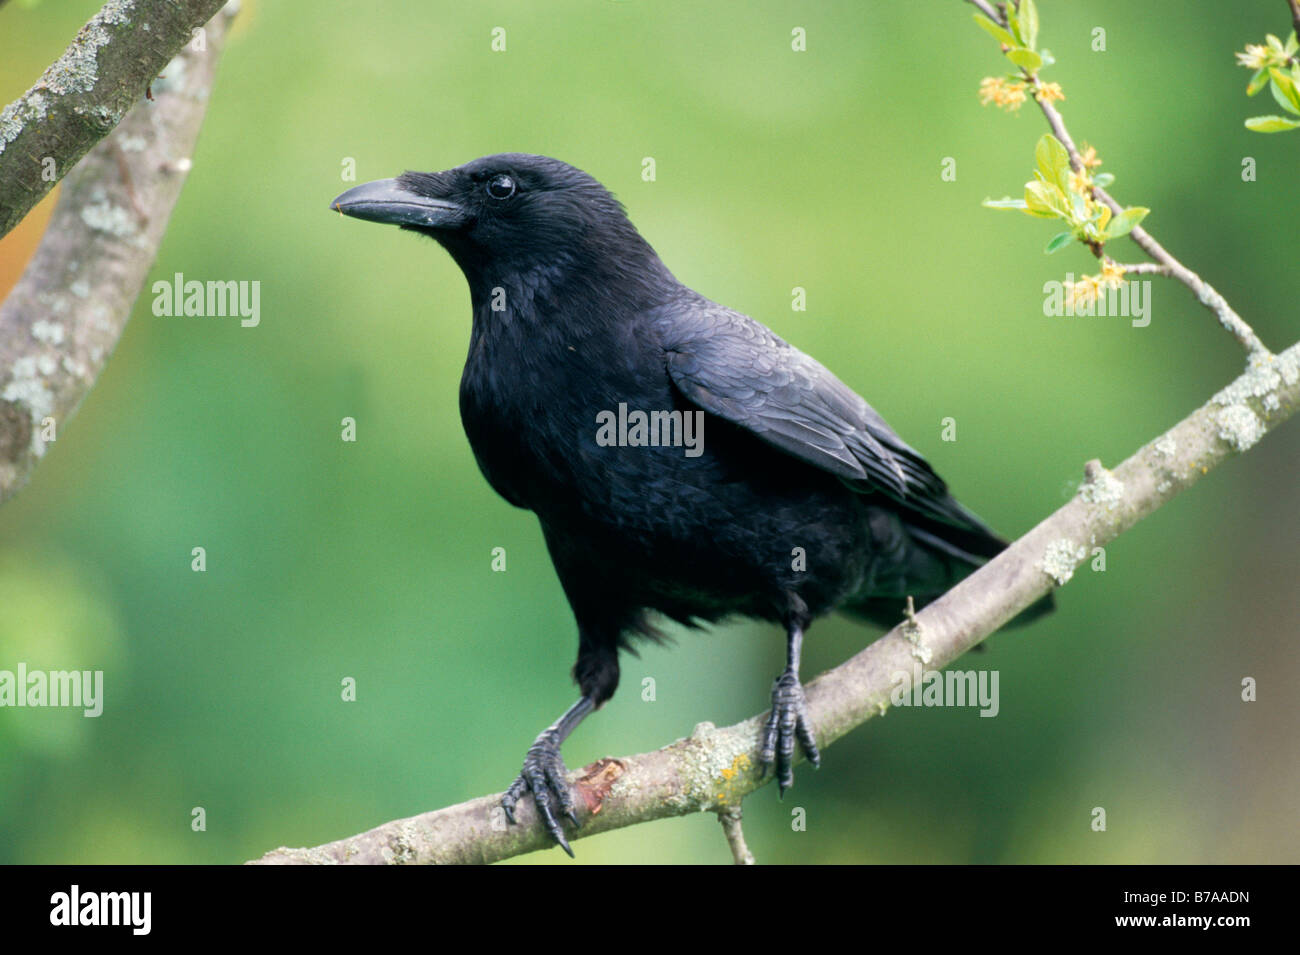 Corneille noire (Corvus corone corone), Allgaeu, Germany, Europe Banque D'Images